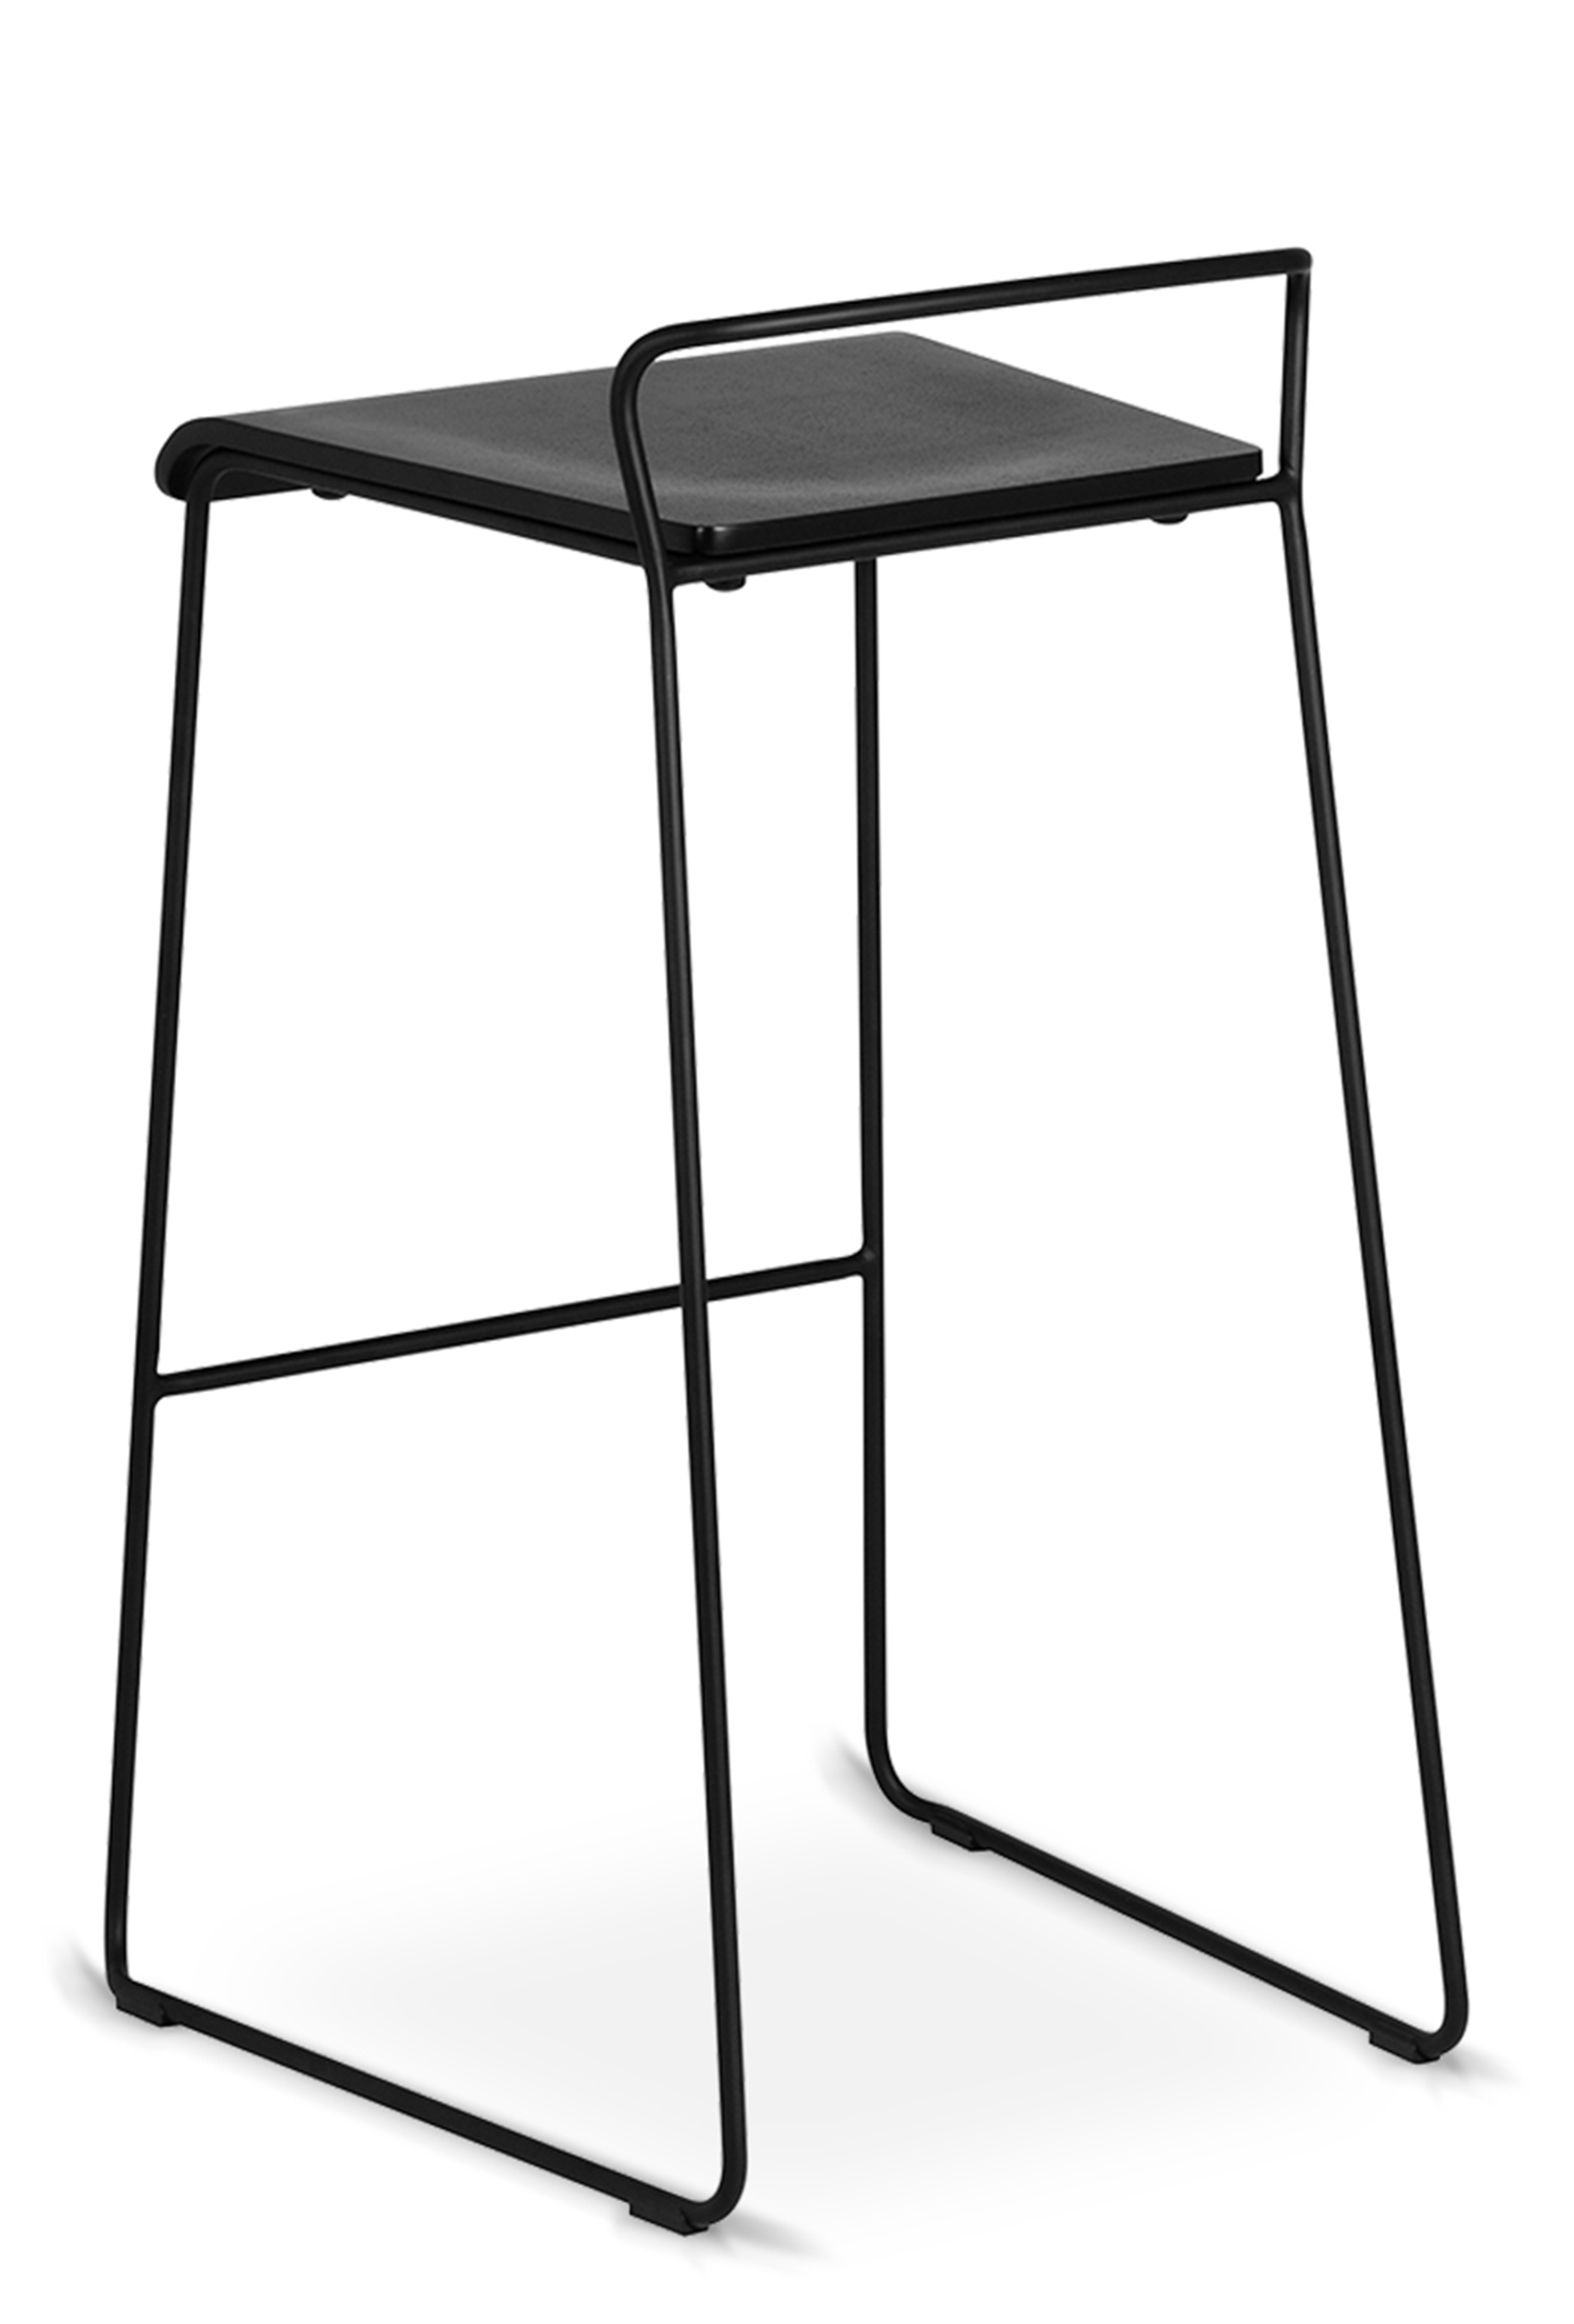 WS - Transit high stool - Black ash (Back angle)